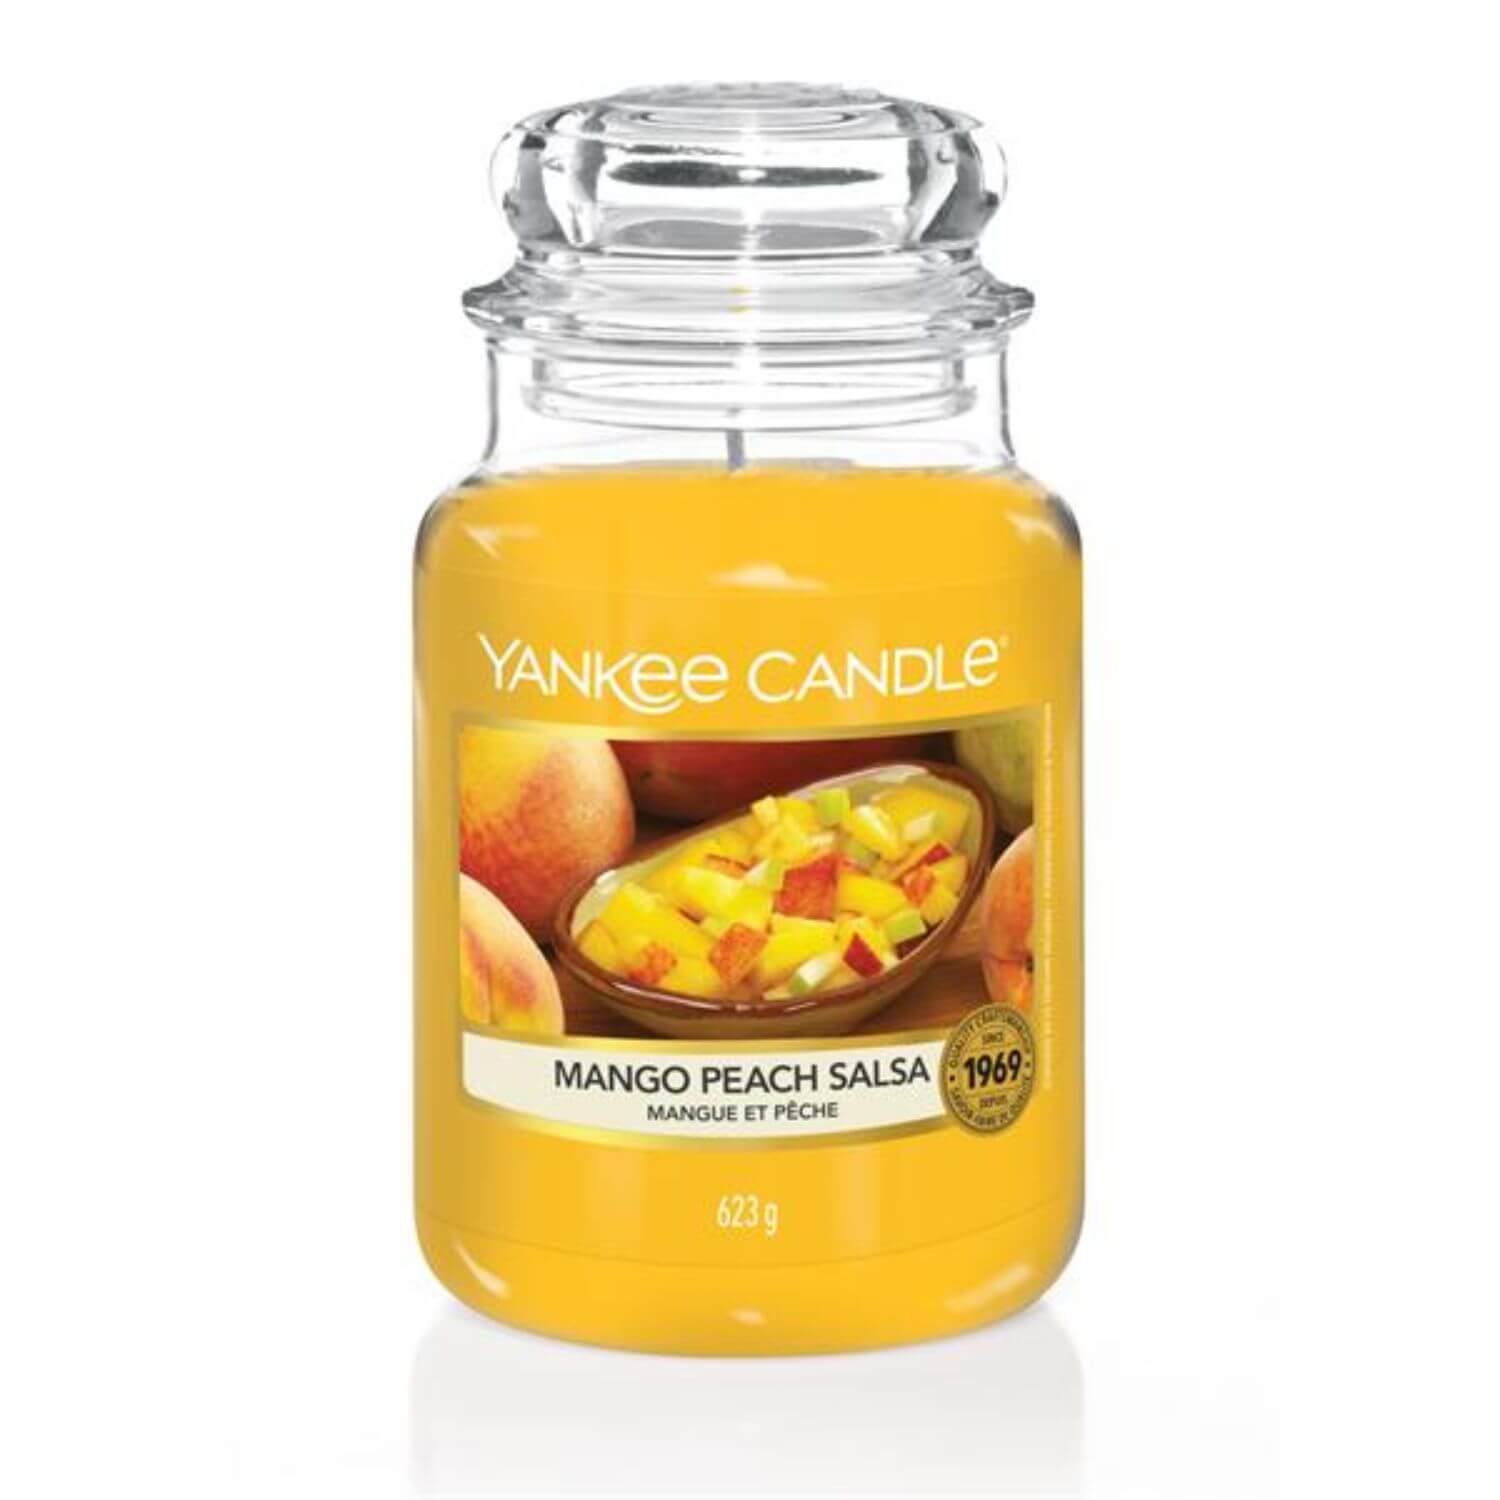 Yankee Candle Mango Peach Salsa Candle Large Jar 1 Shaws Department Stores